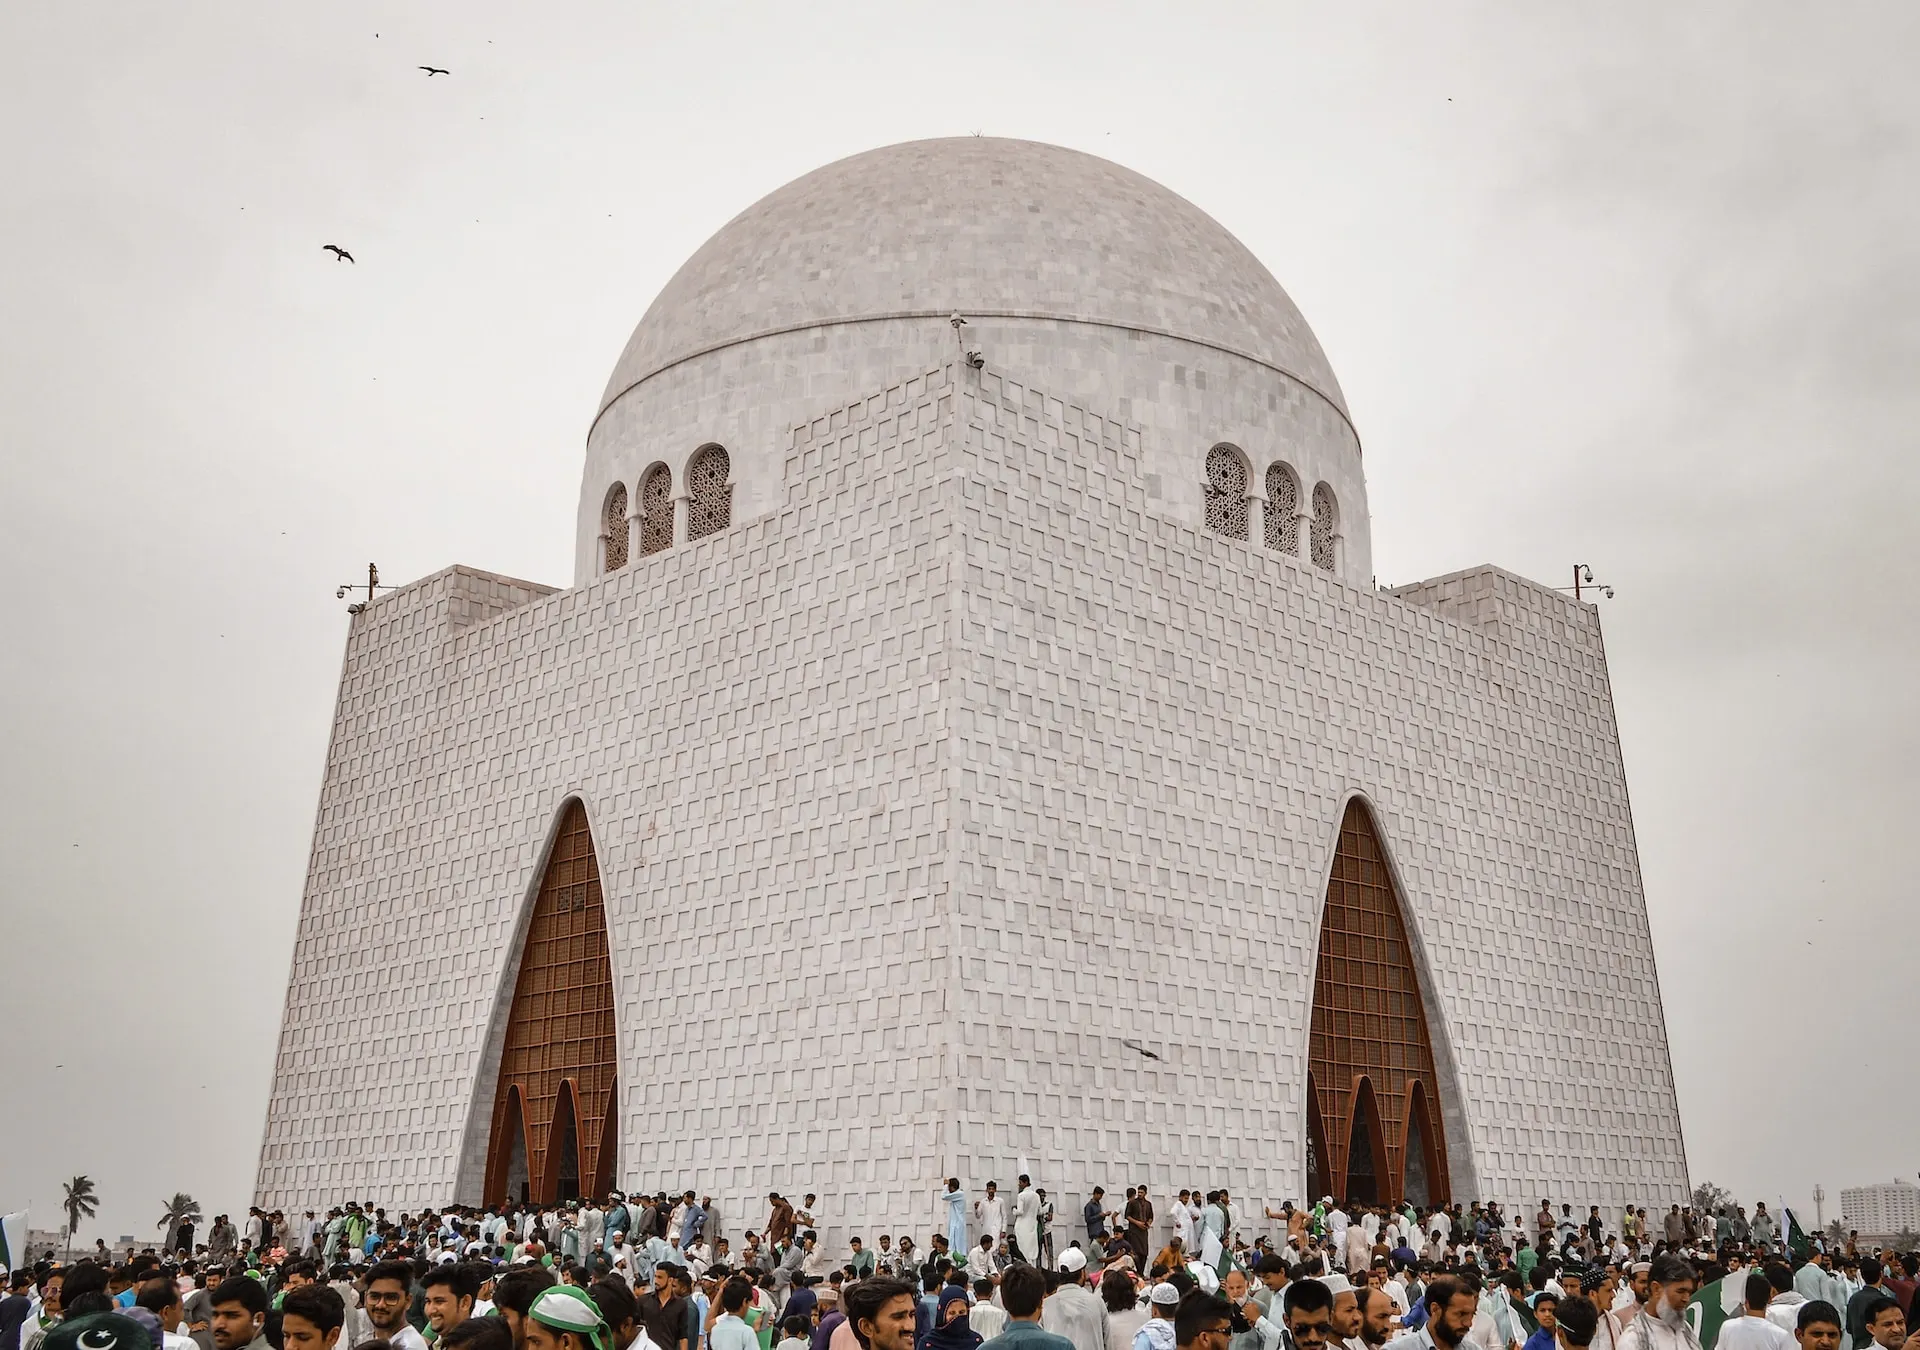 Mohammed Ali Jinnah Mausoleum, Source: Photo by Hassan Anwer on Unsplash